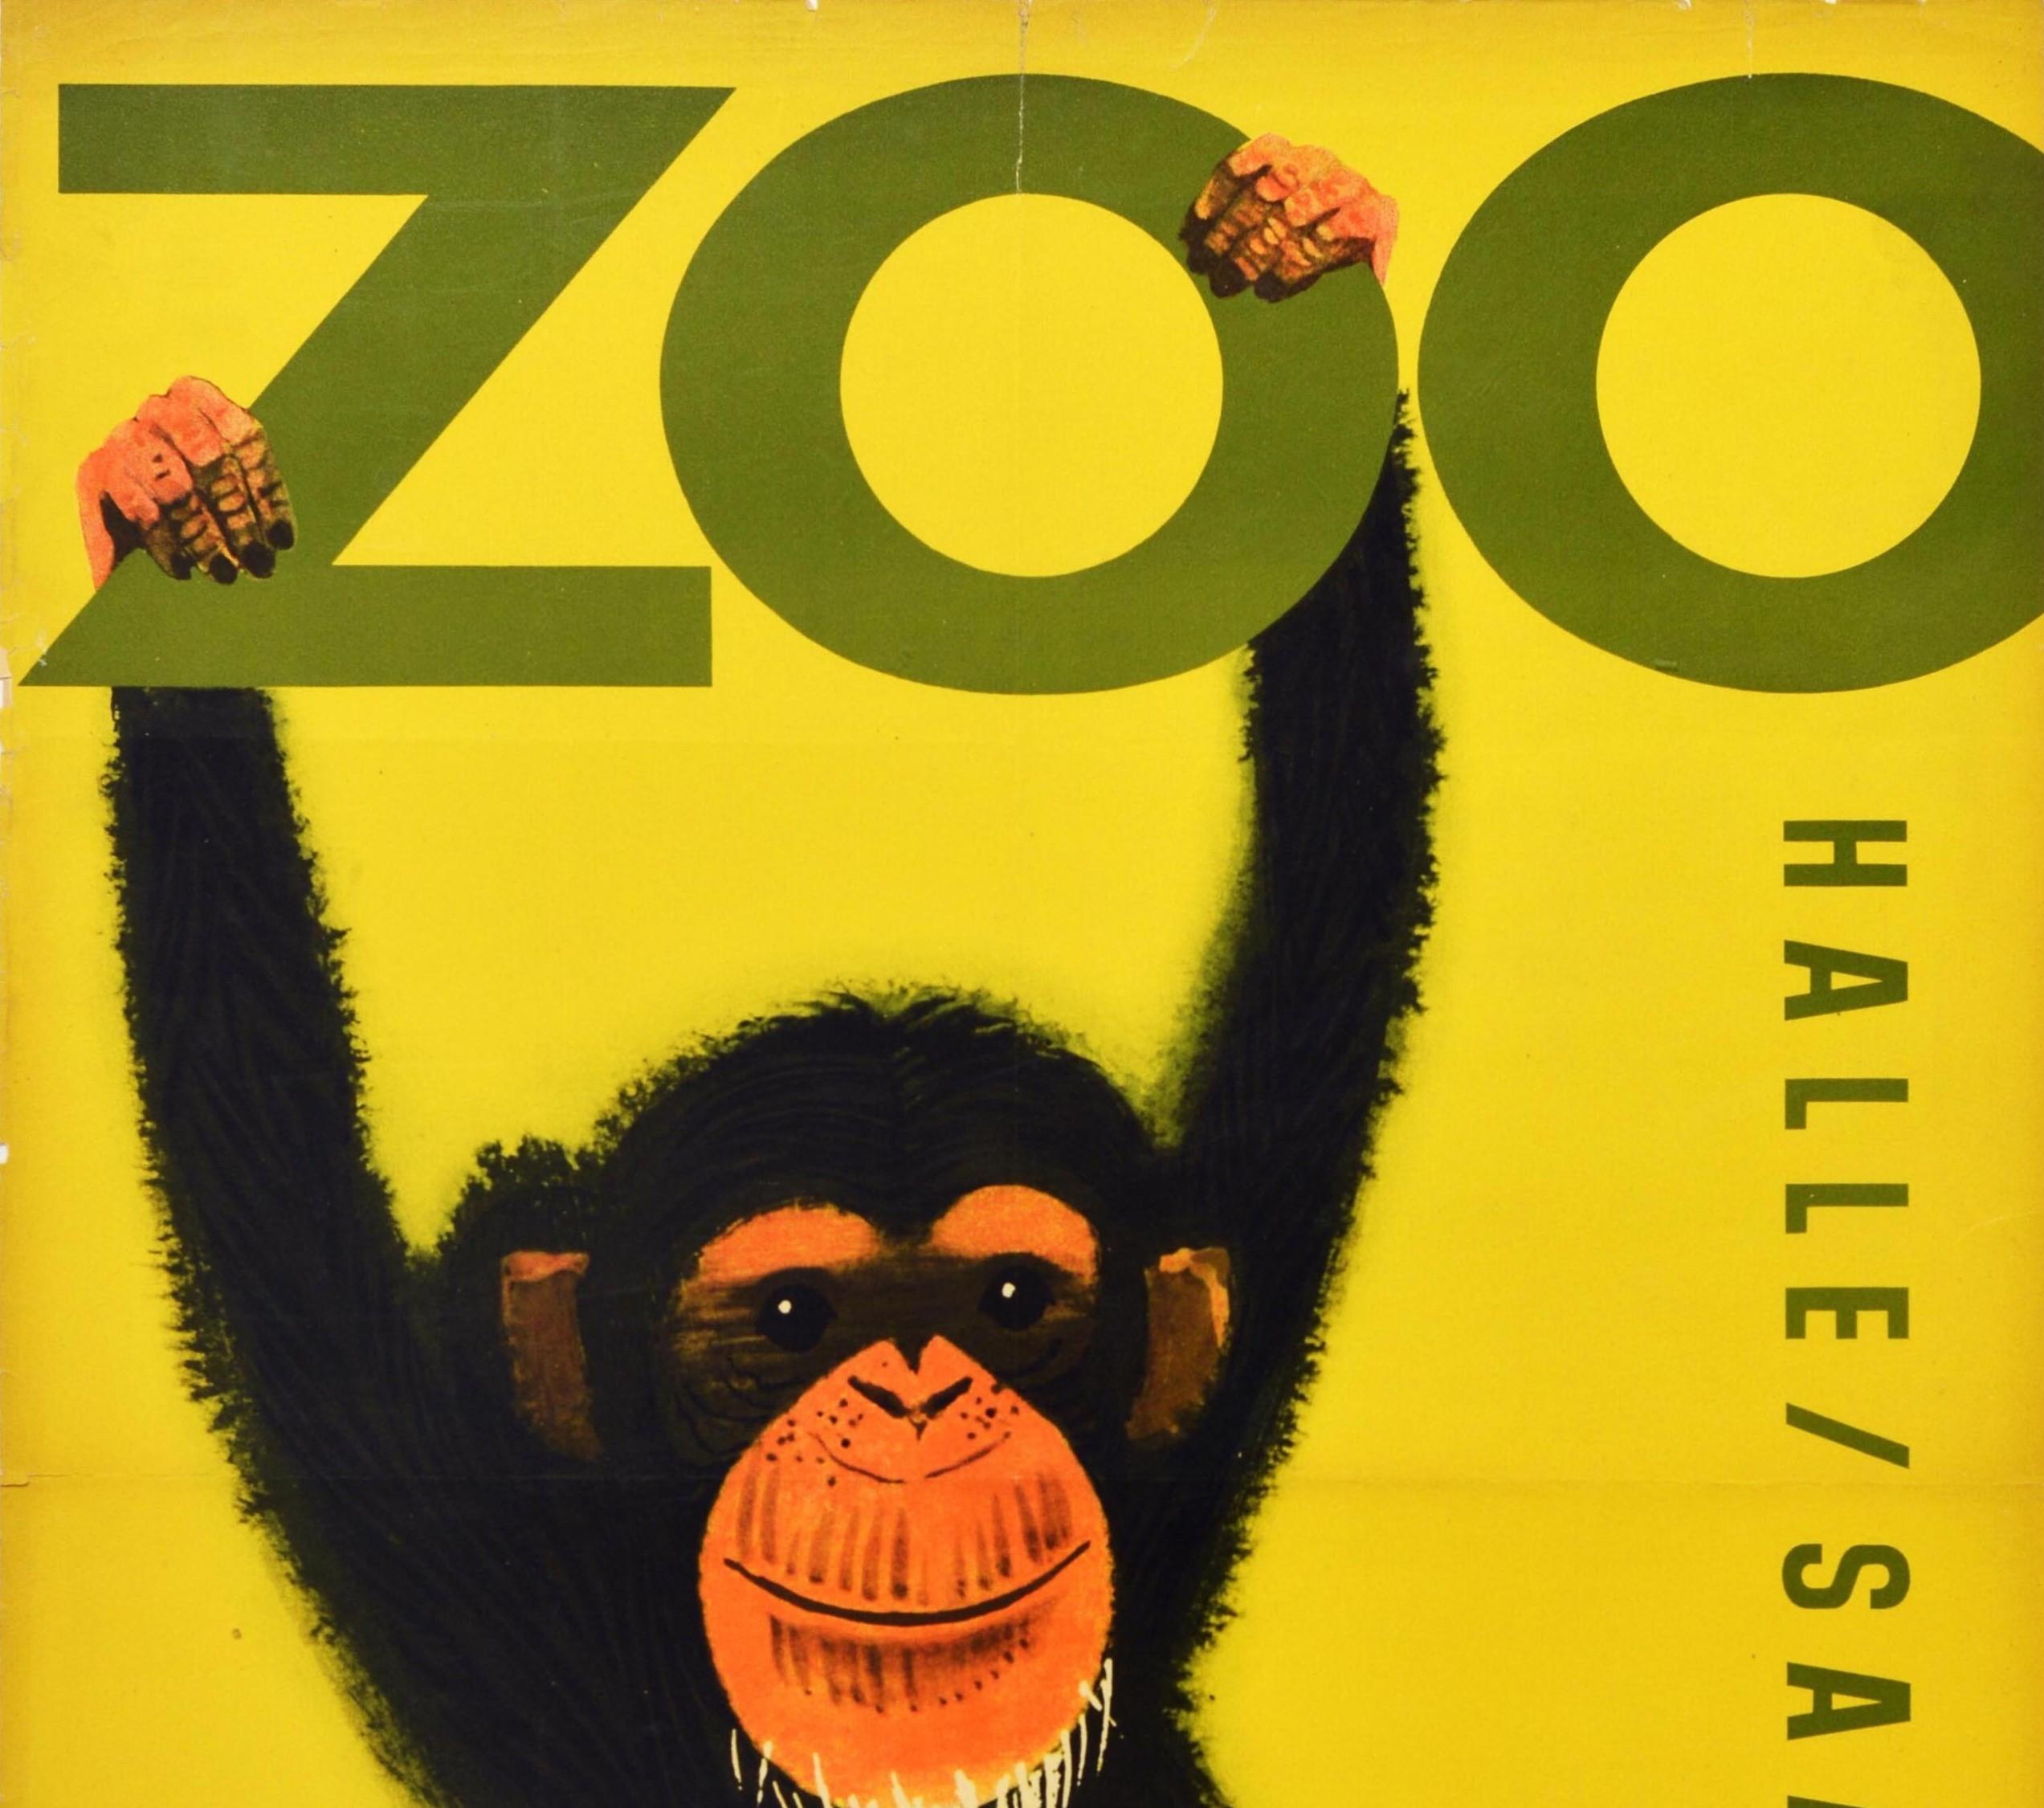 Original Vintage Poster Halle Saale Zoo Germany Chimpanzee Monkey Design Artwork - Print by Unknown